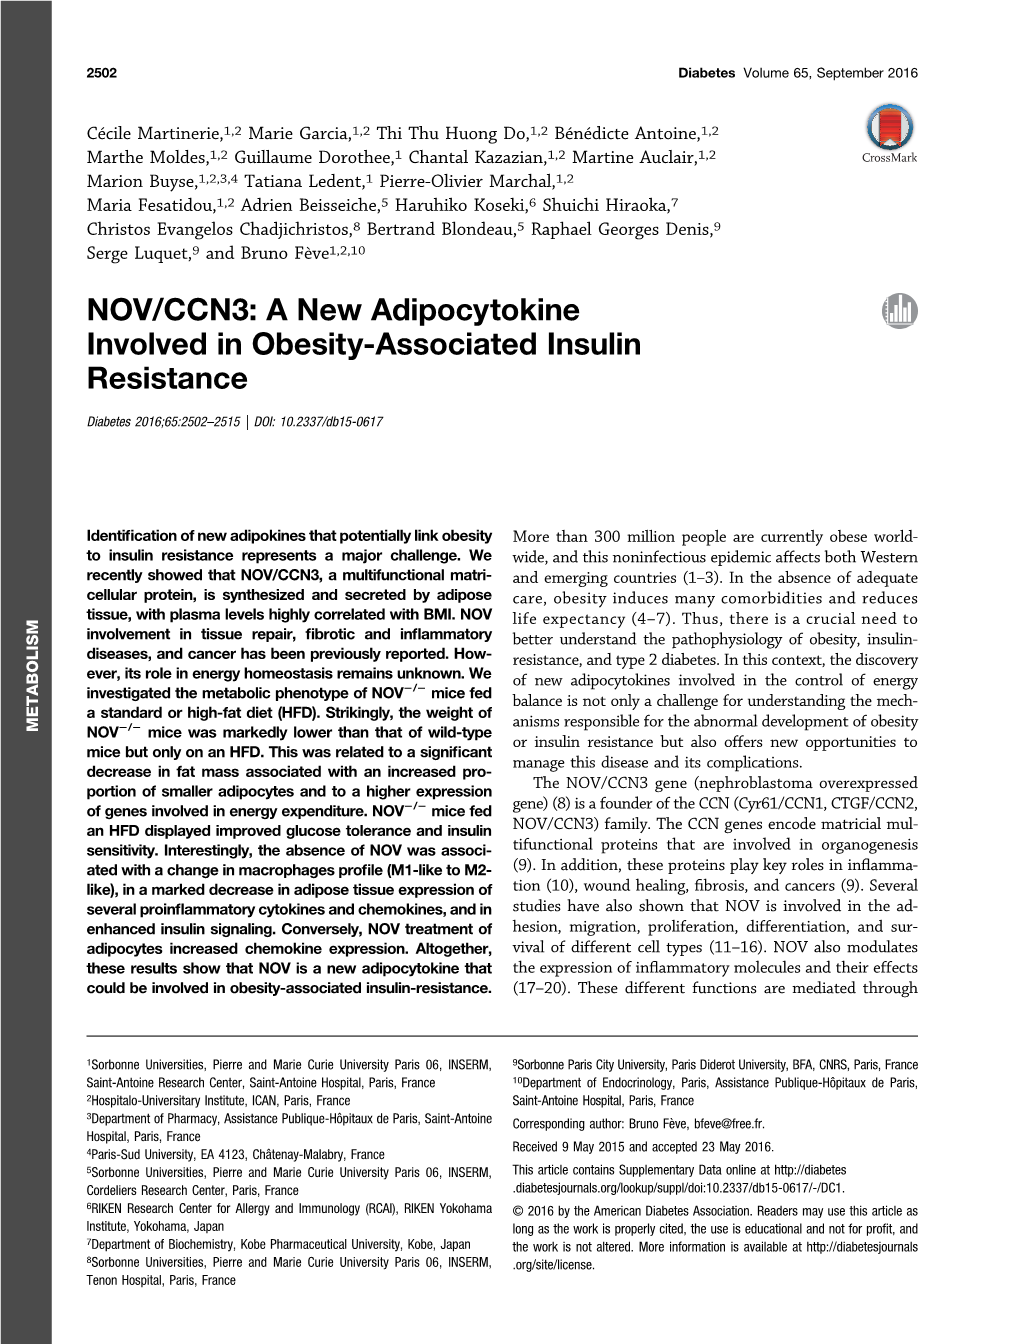 NOV/CCN3: a New Adipocytokine Involved in Obesity-Associated Insulin Resistance